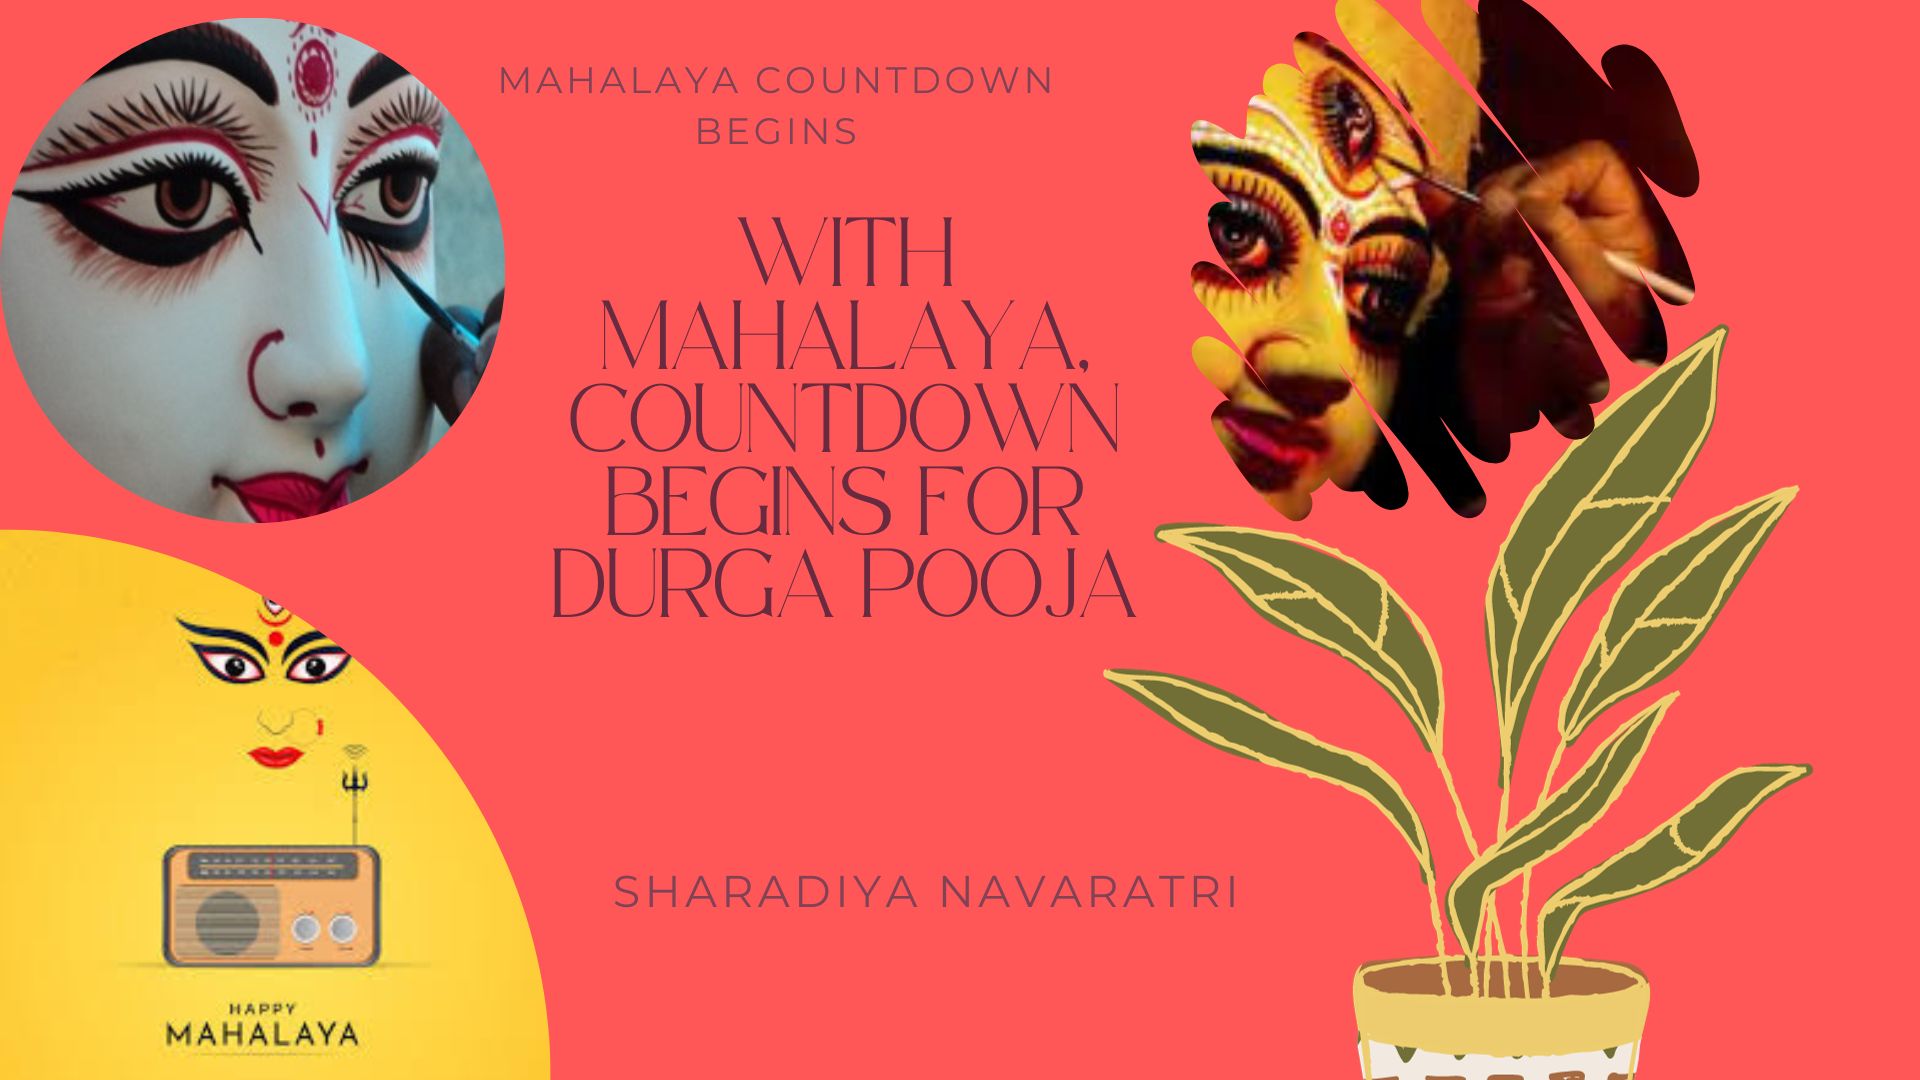 With Mahalaya, countdown begins for Durga Pooja